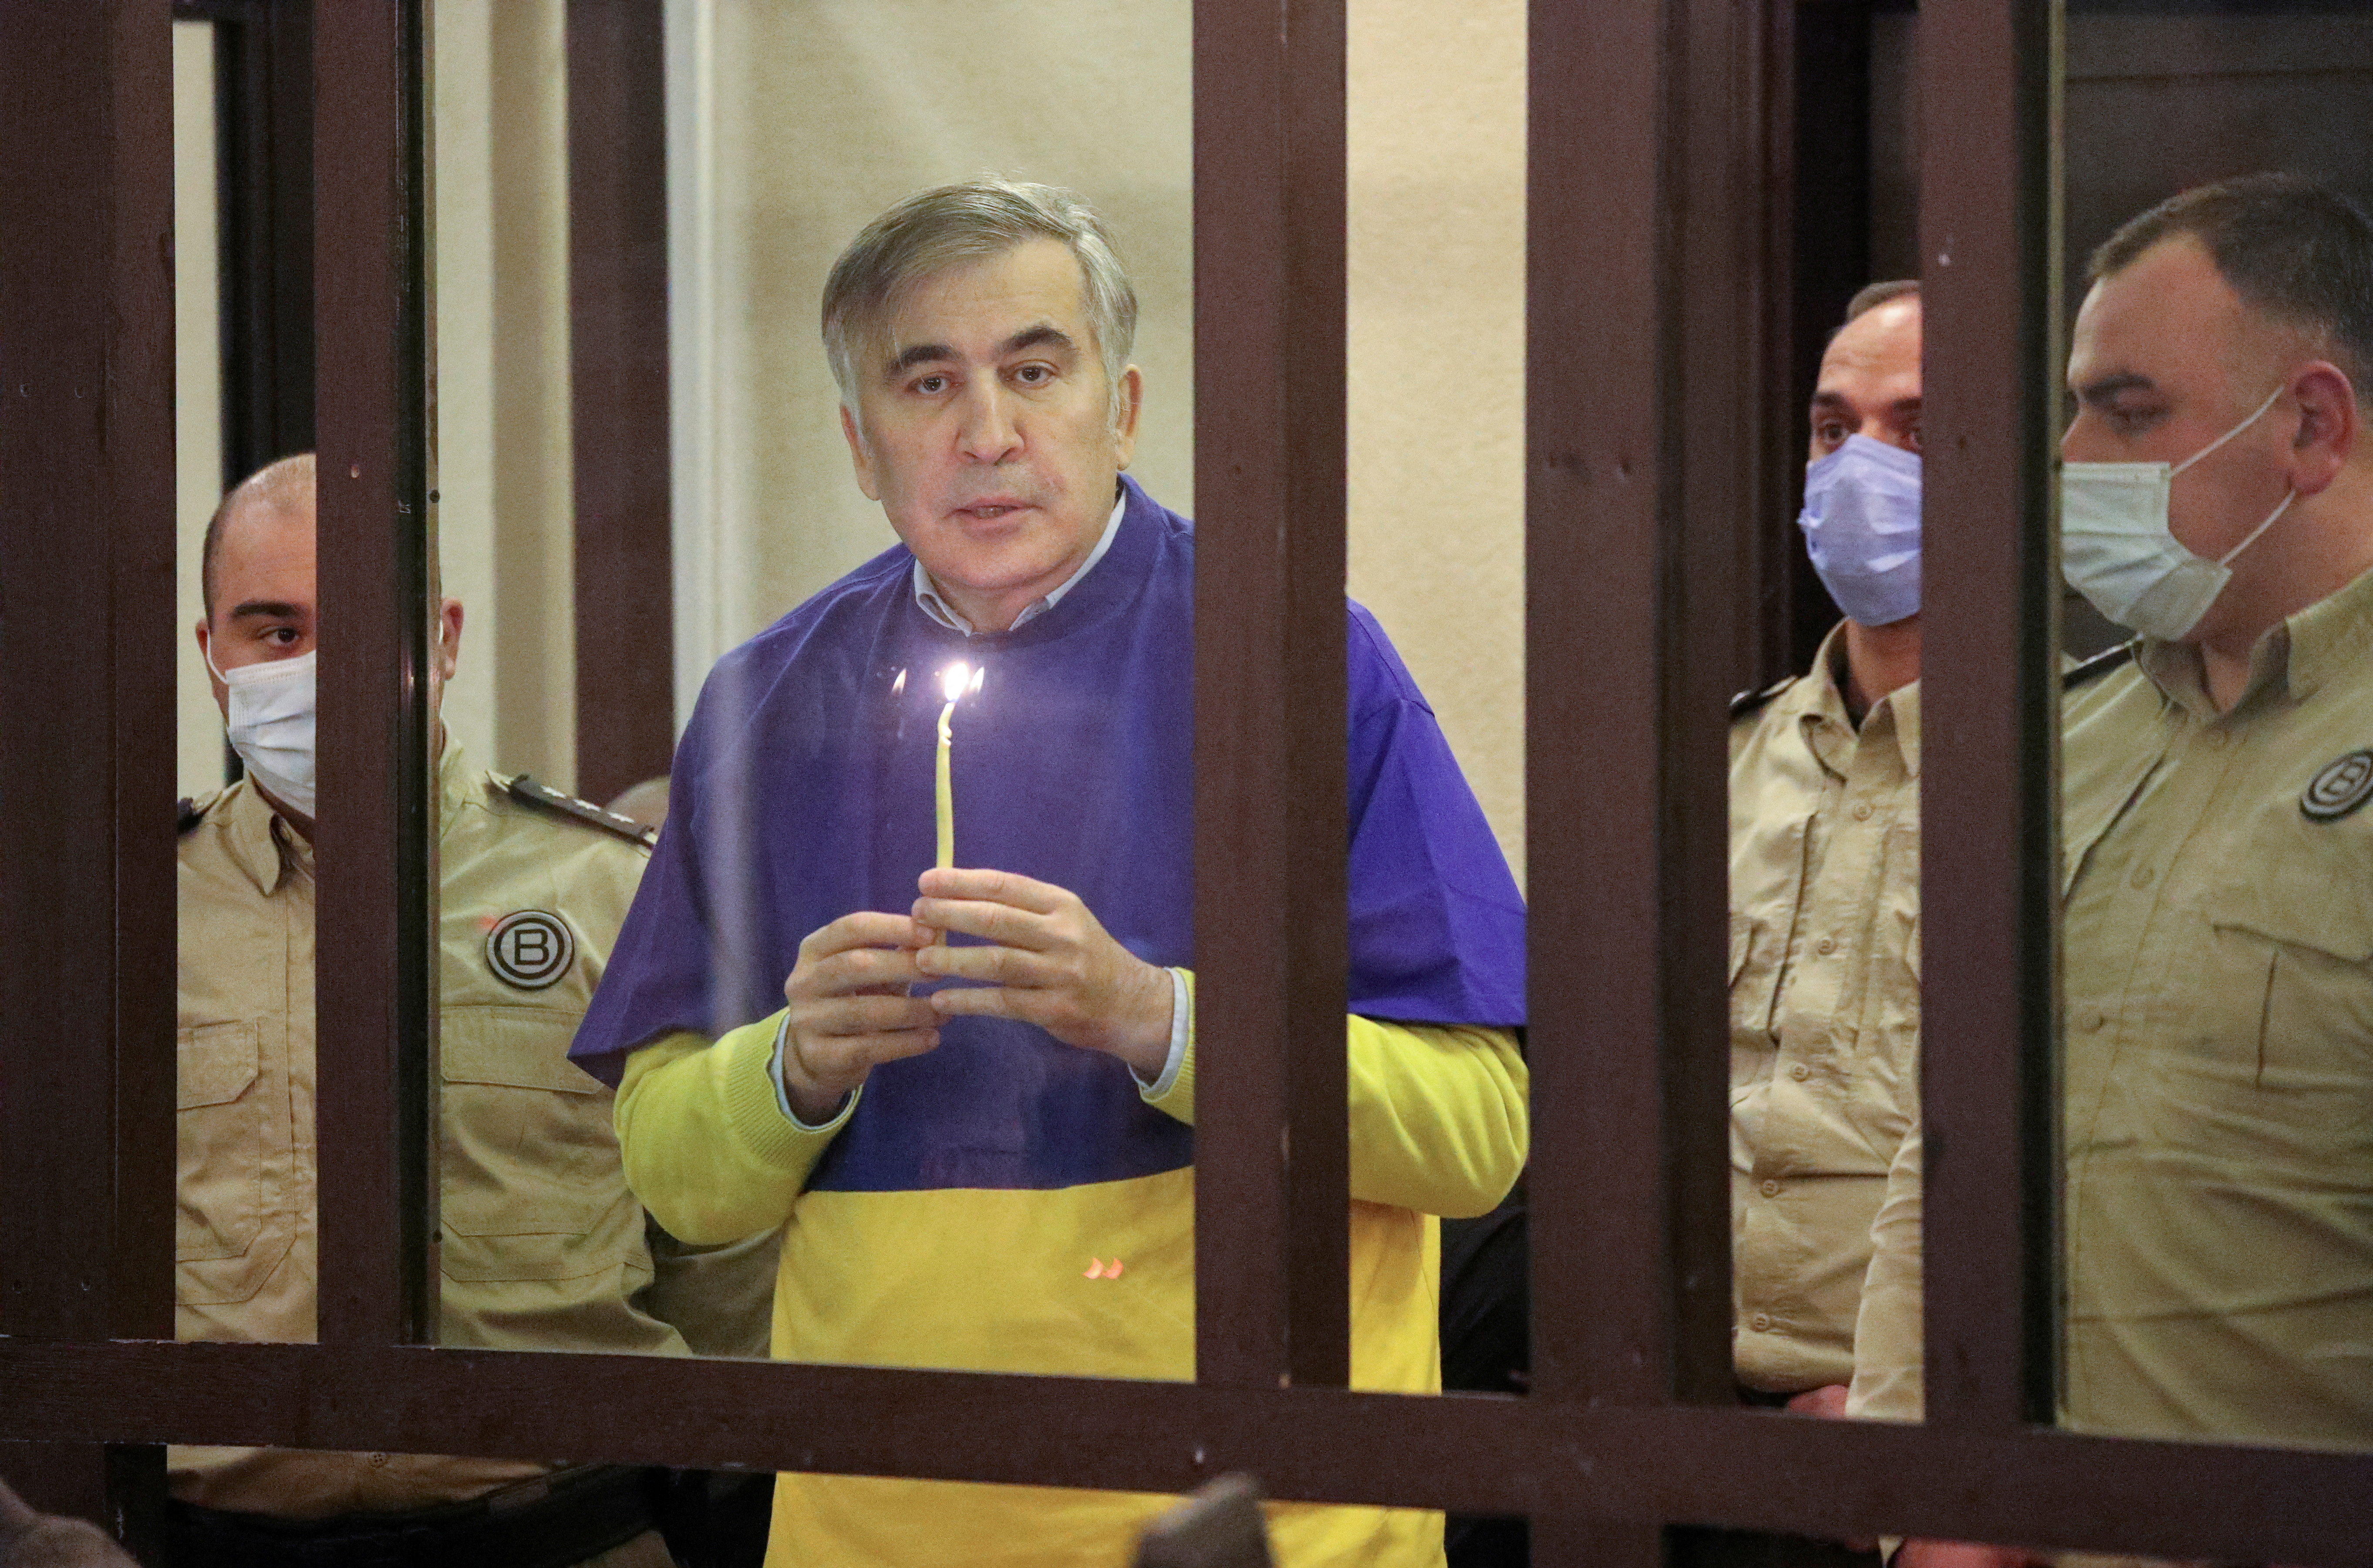 Georgian former President Saakashvili prays for Ukraine during a court hearing in Tbilisi